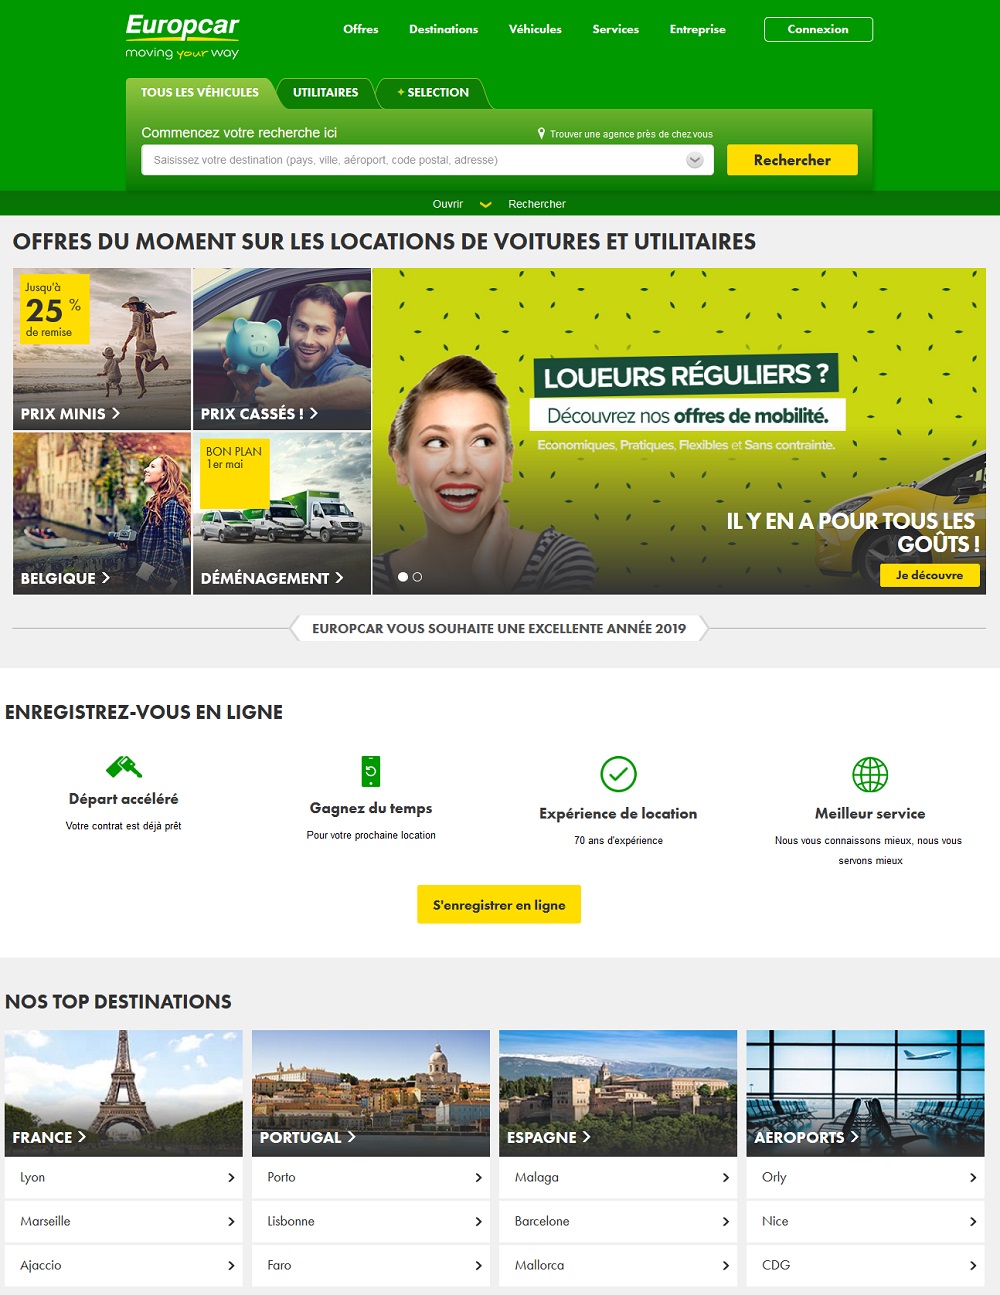 Europcar France - Europcar location voiture - Europcar location utilitaire, Europcar code promo